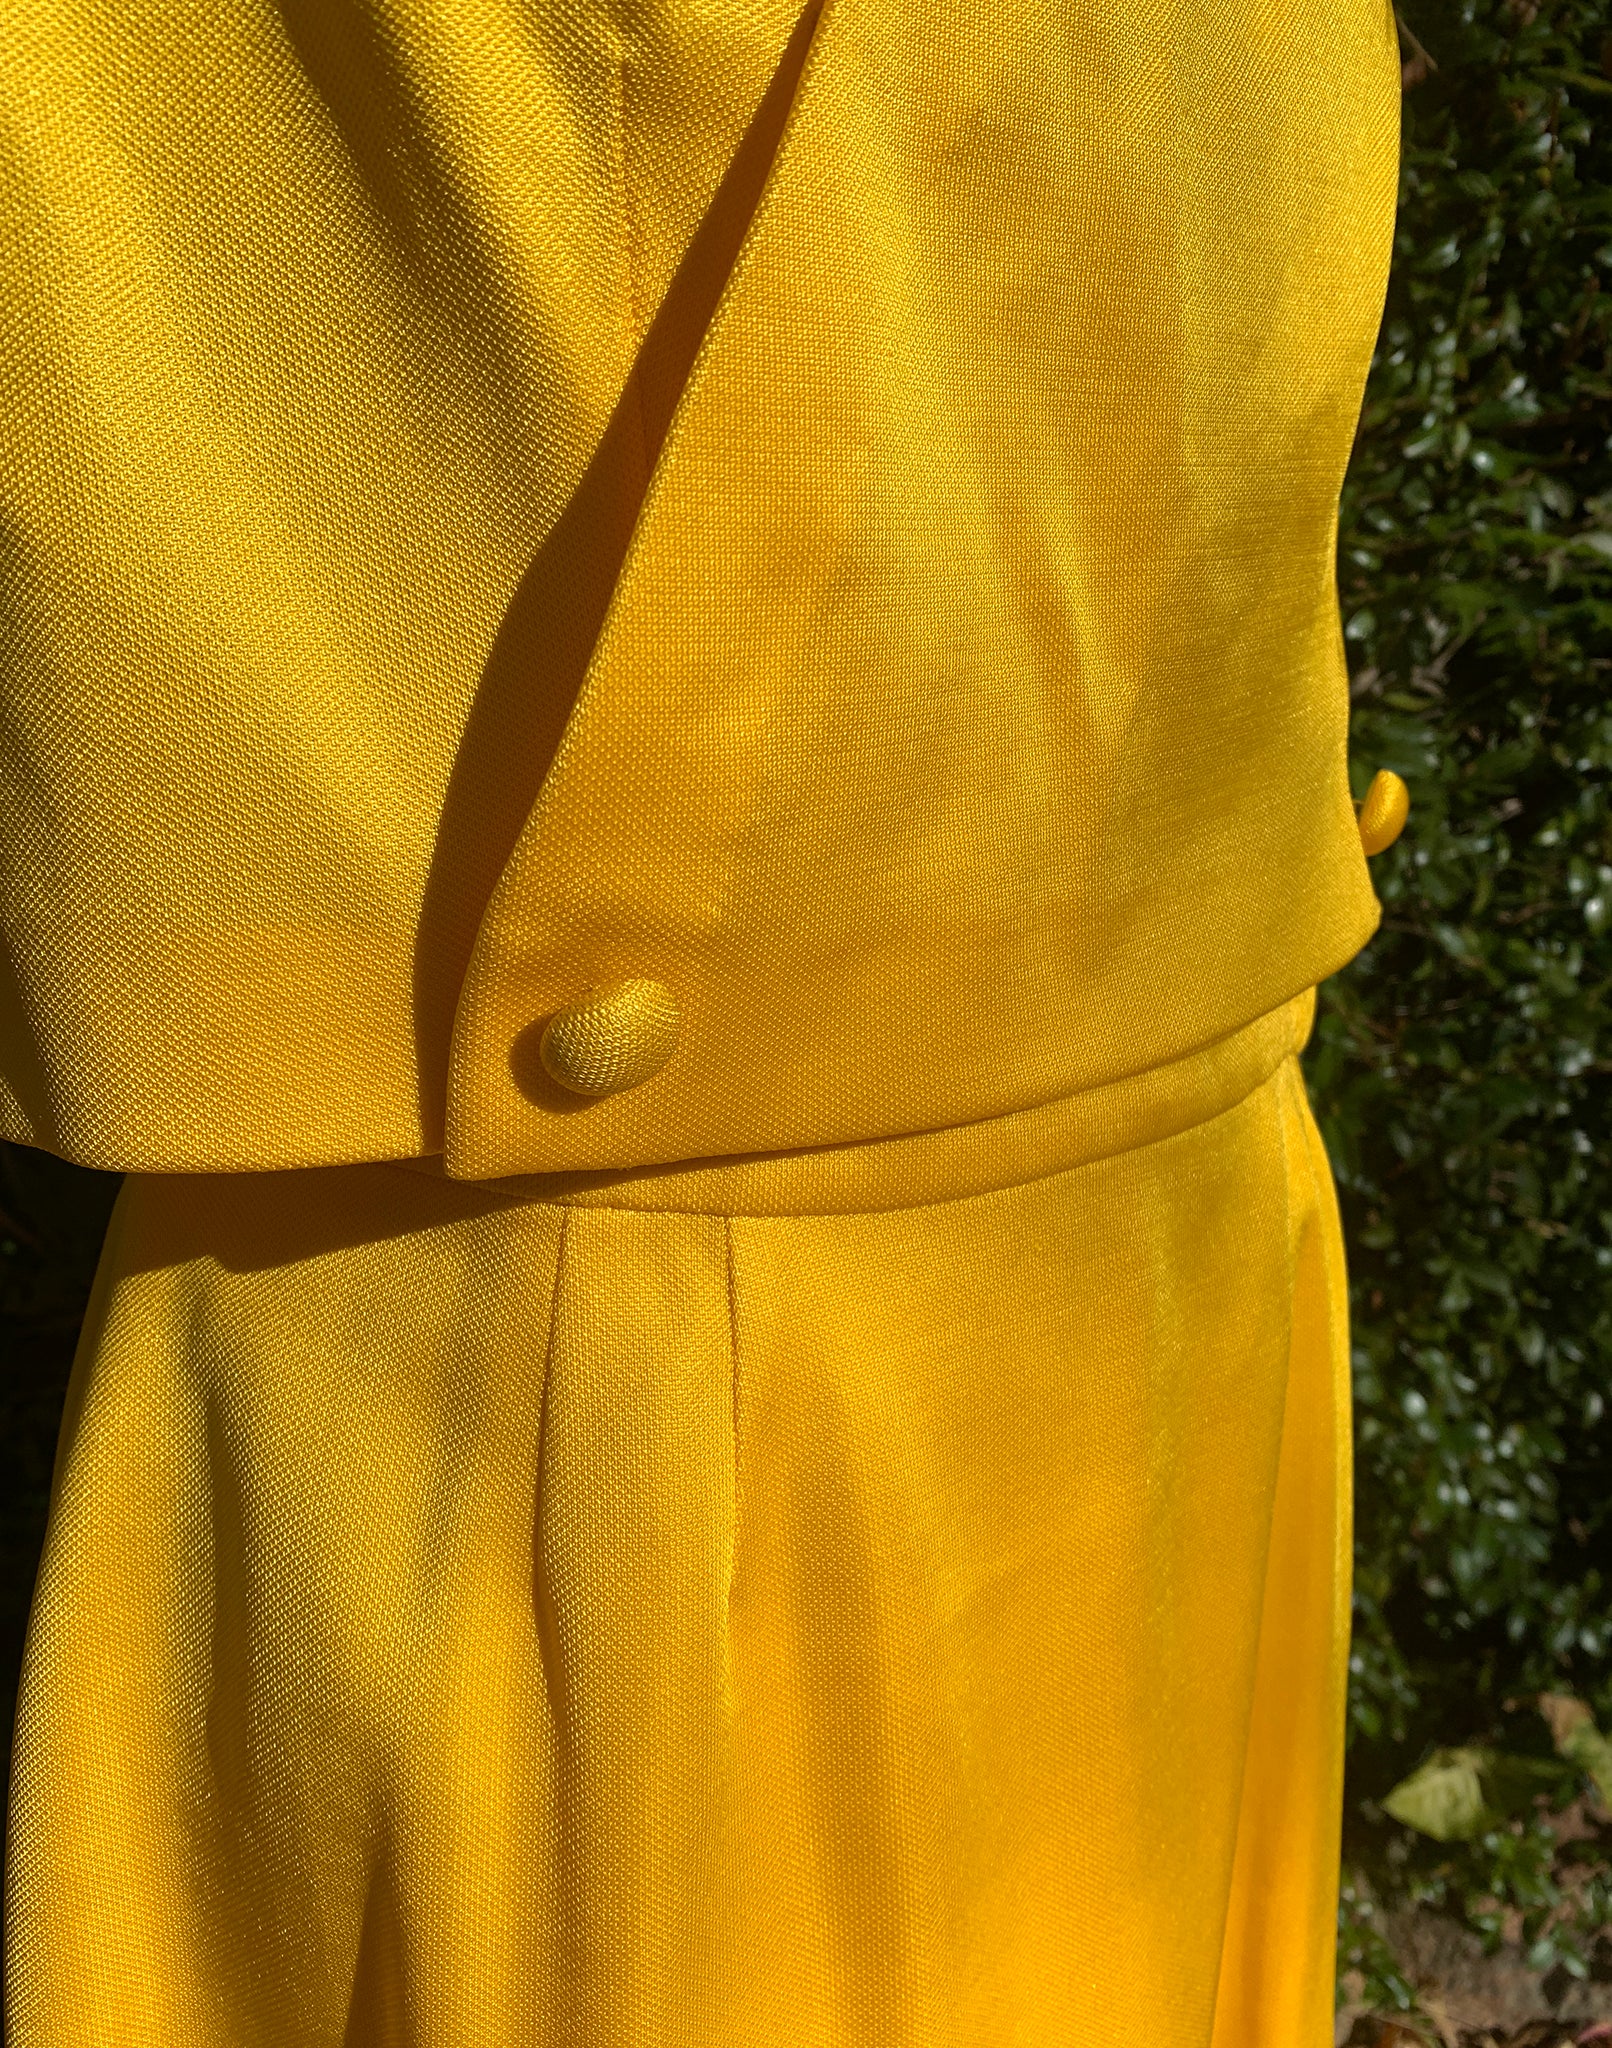 Vintage 60's Marlborough Fashions David Jones Yellow Twin Set - Size M/L